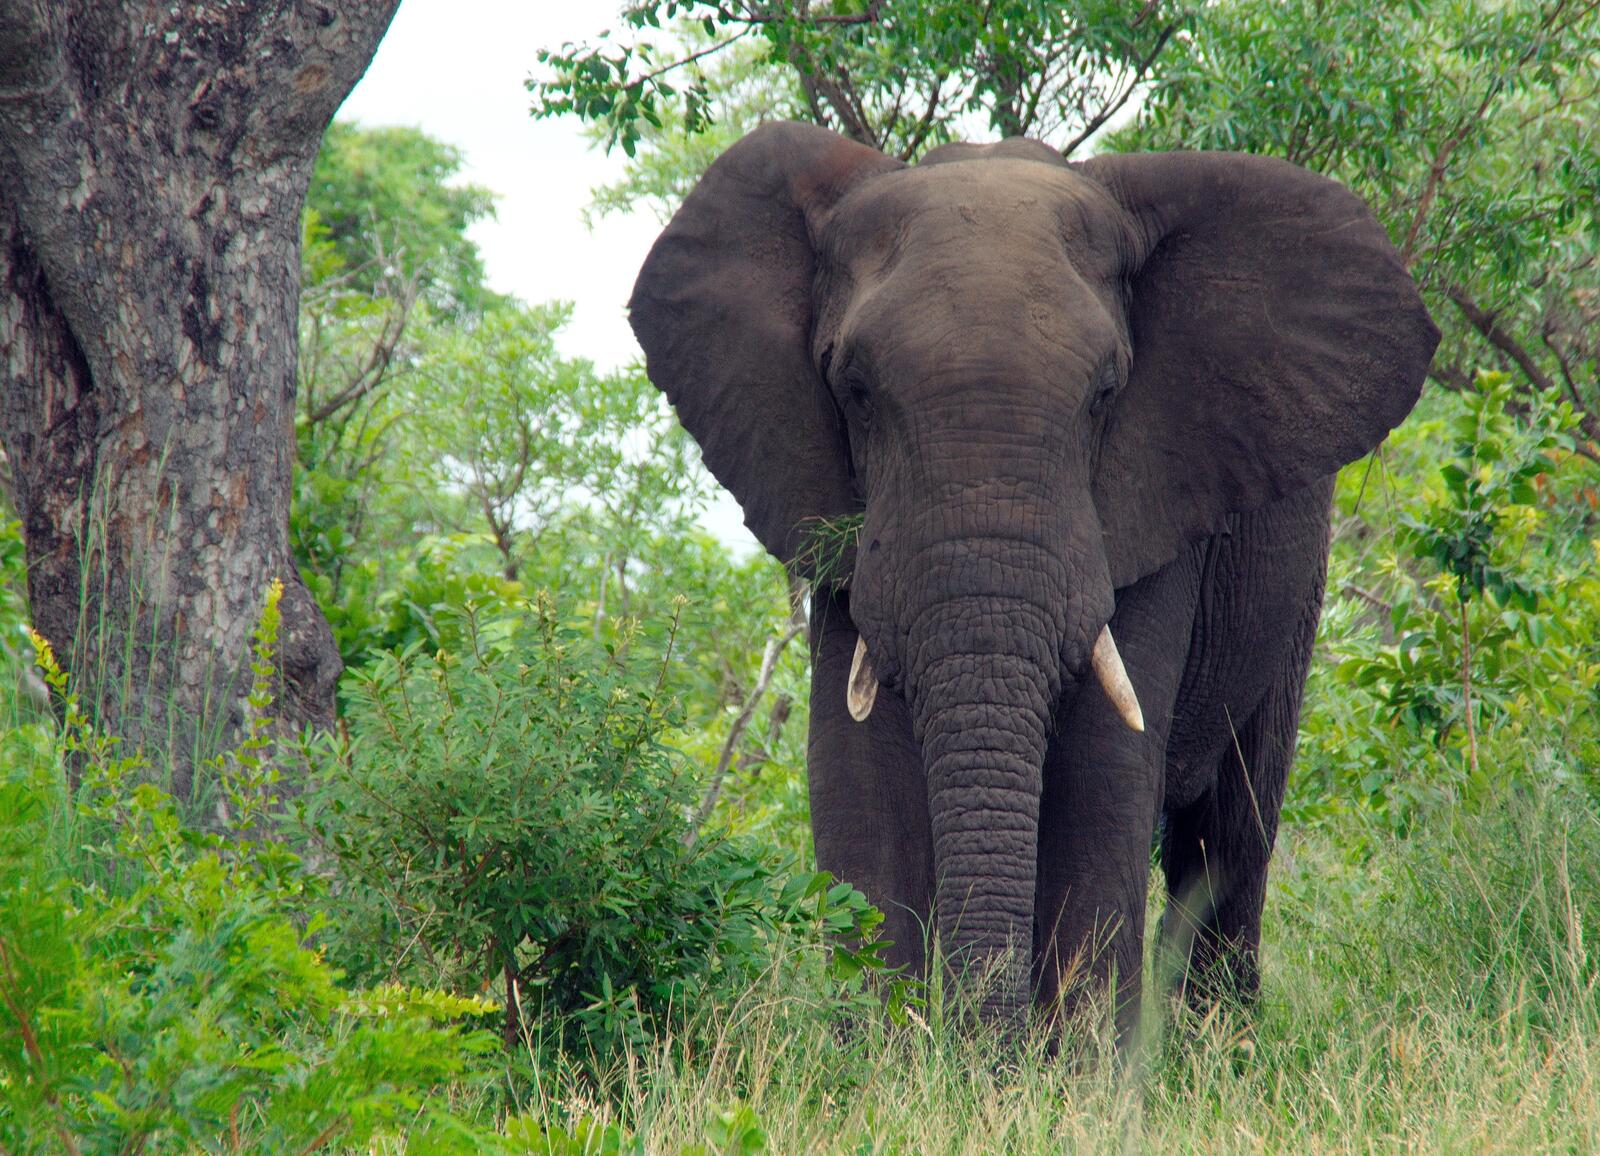 Free photo A large African elephant eats grass near a tree